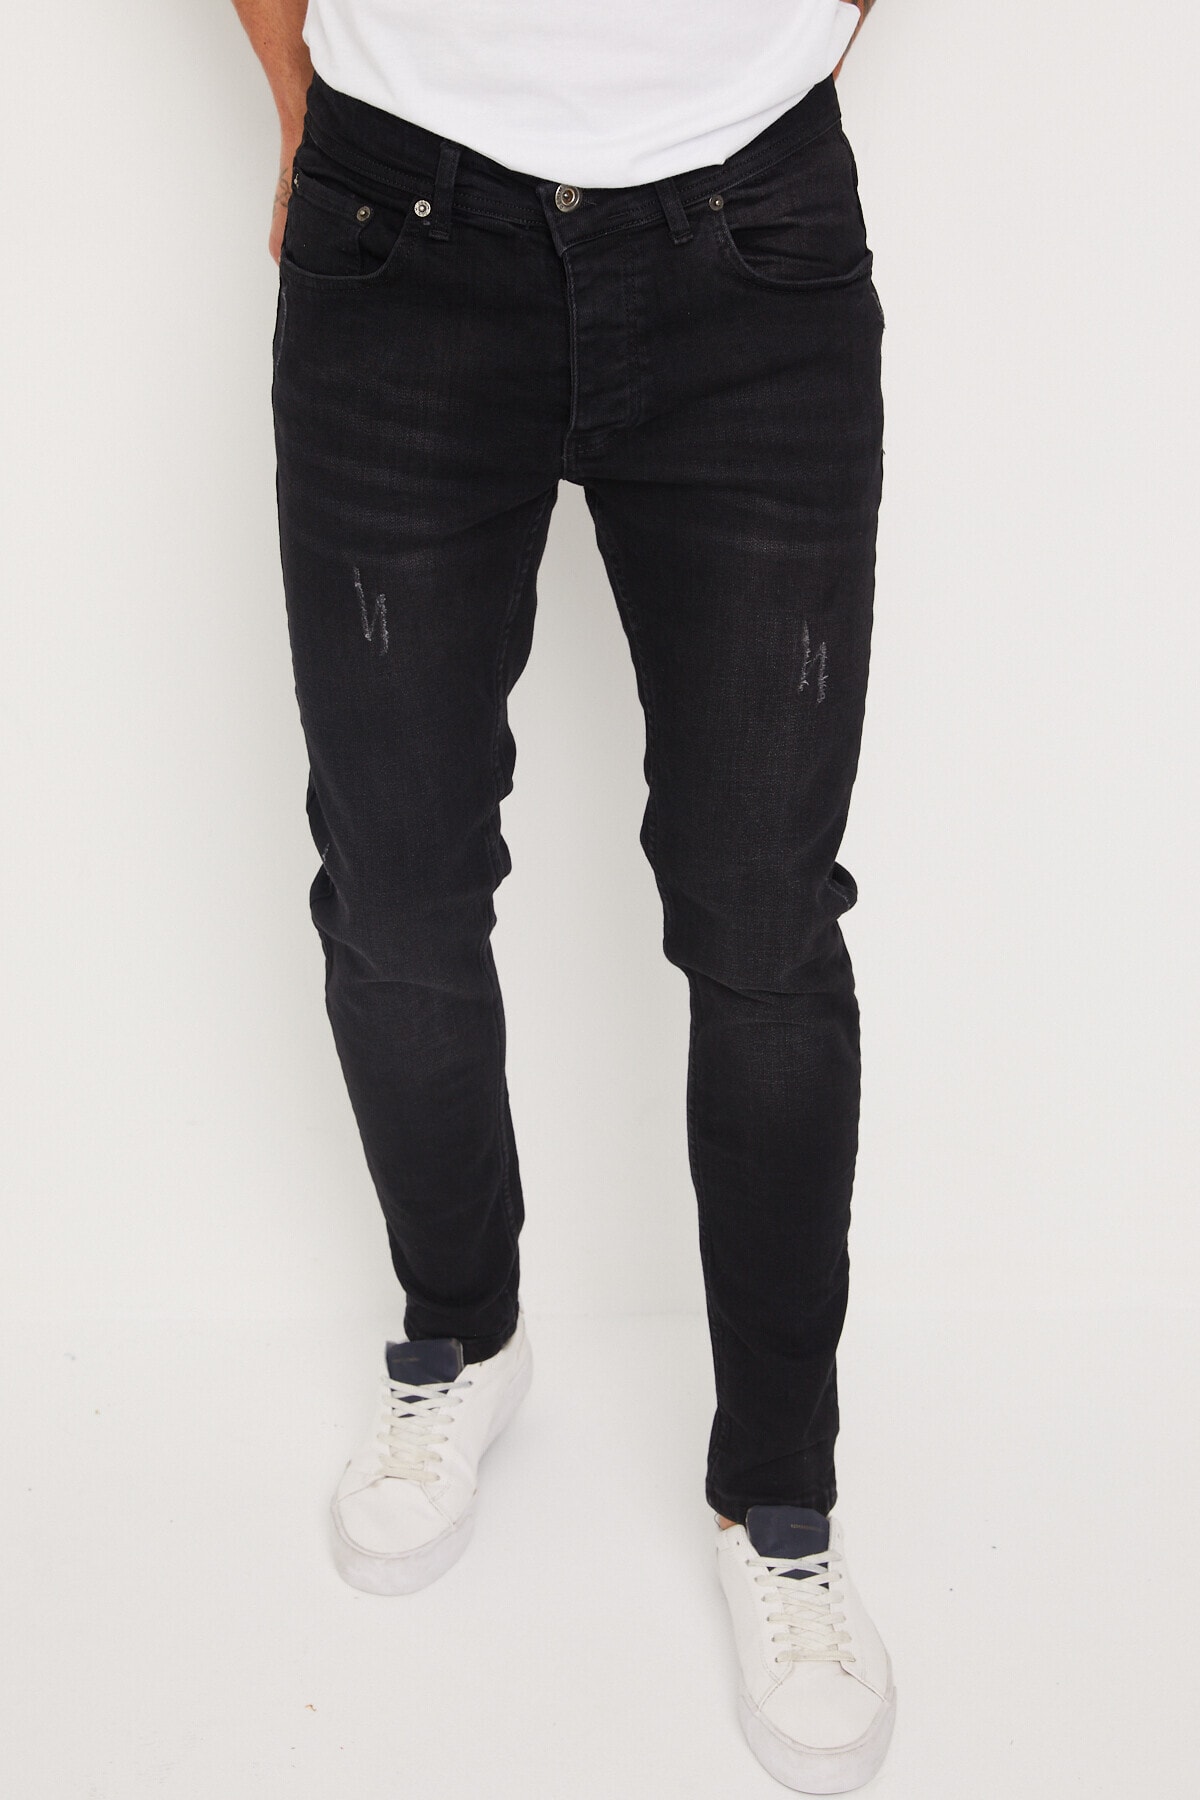 Newtime Erkek Jeans Skinny Fit Likralı Tırnaklı Siyah